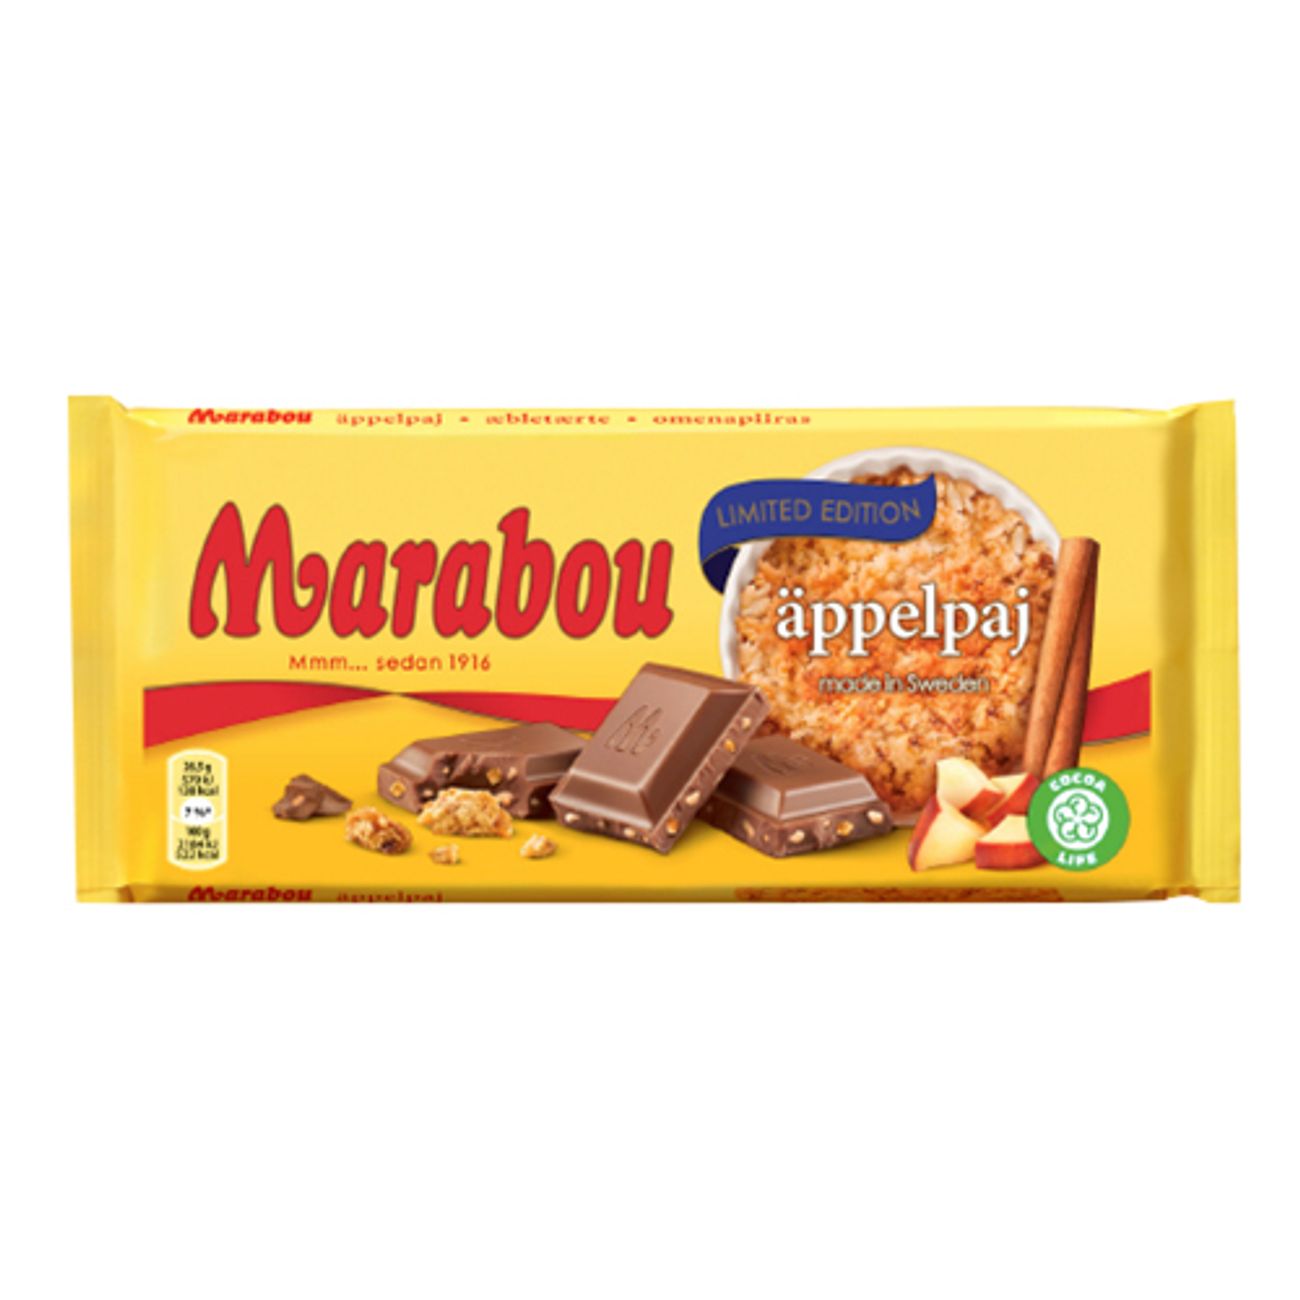 marabou-appelpaj-chokladkaka-1